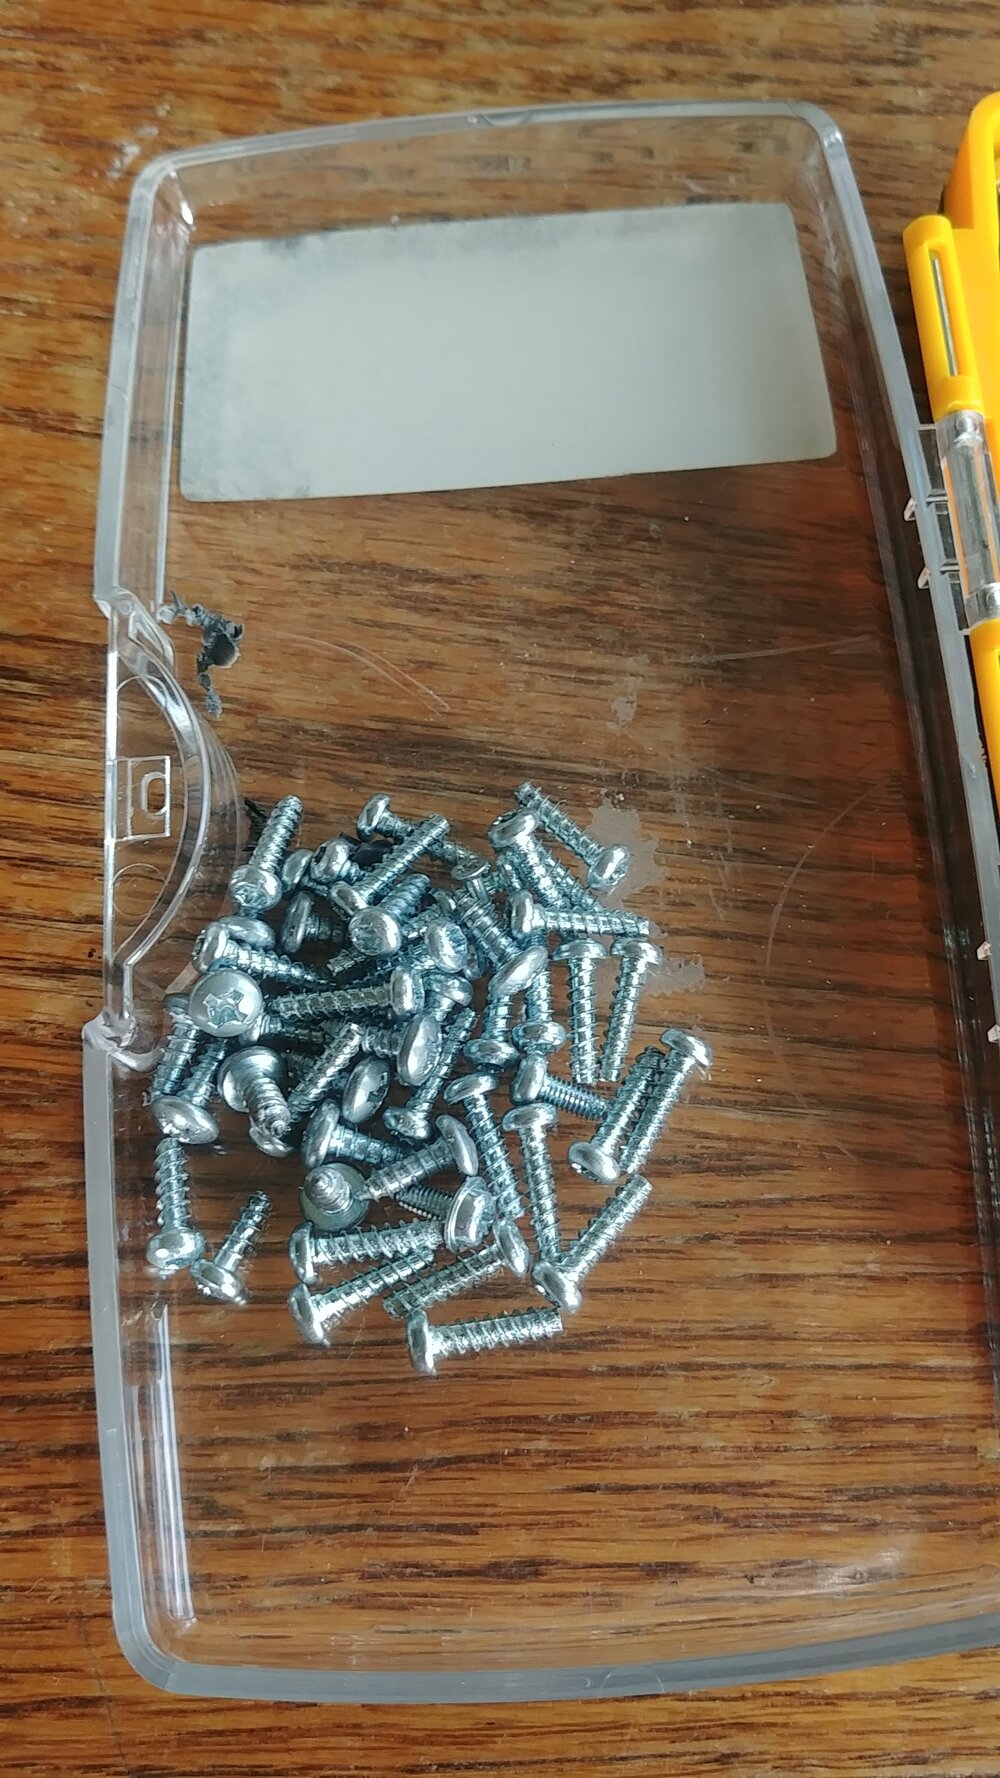 So many star-bit screws...